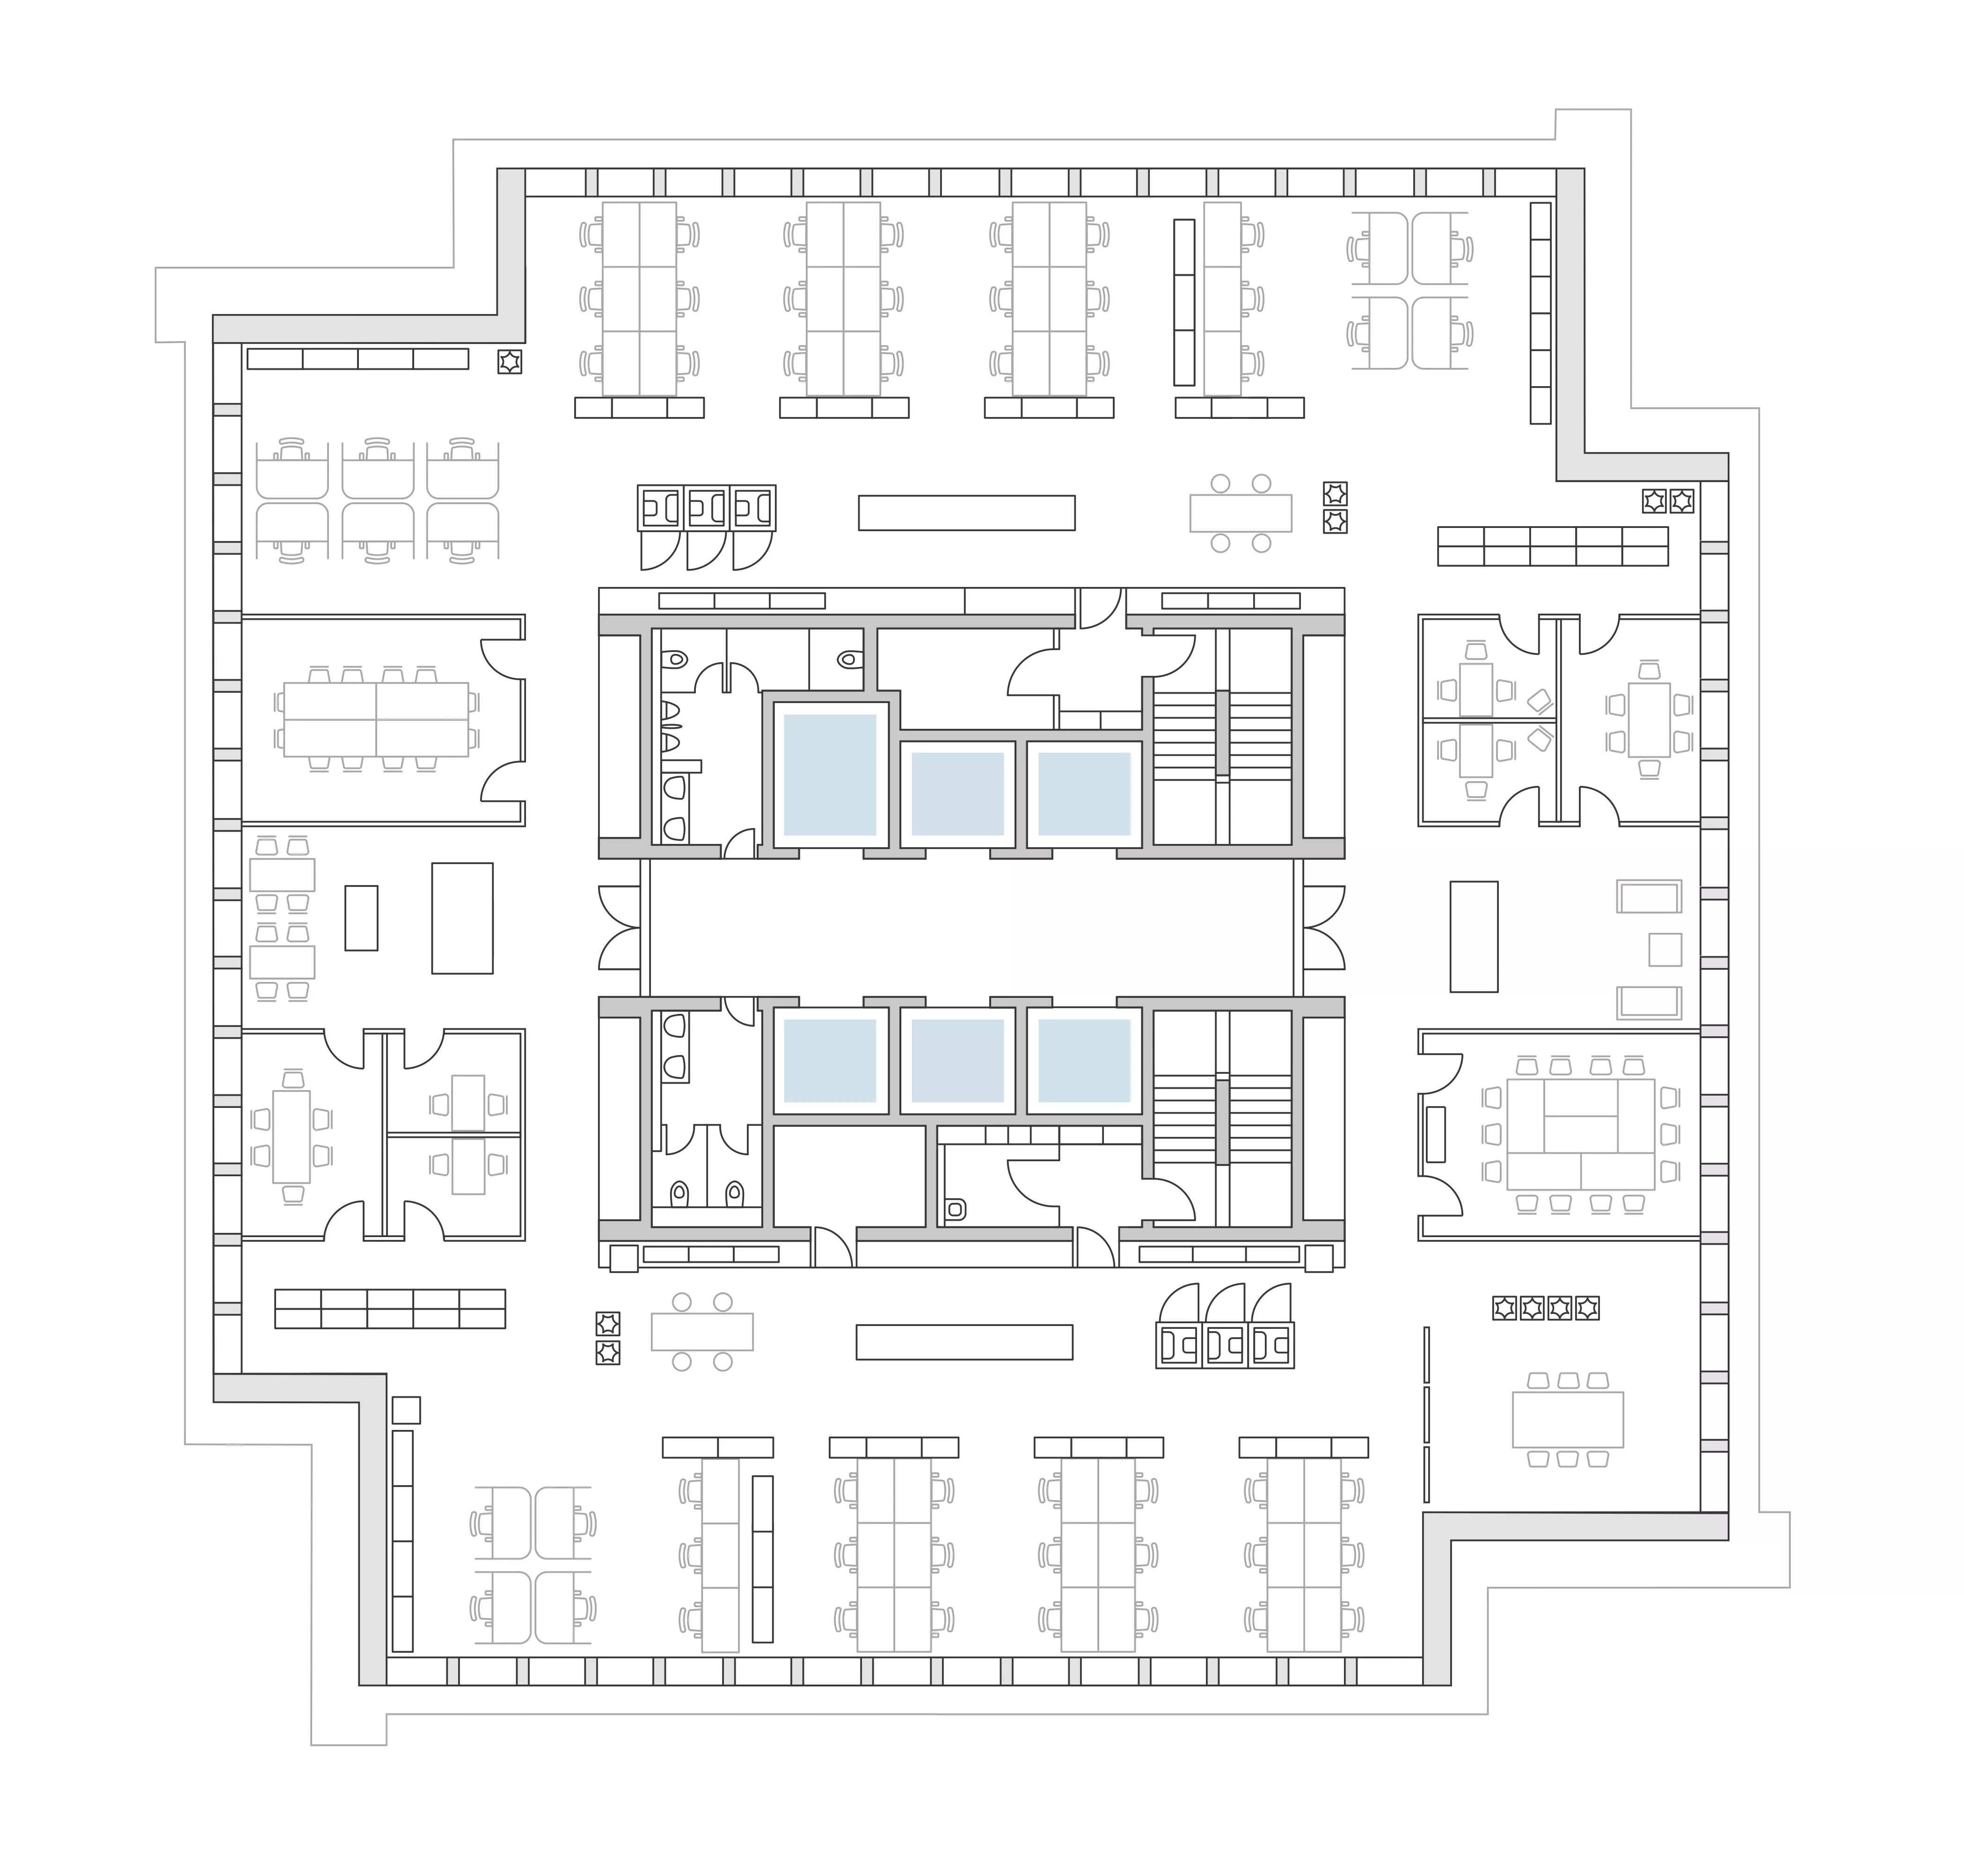 Floorplan of Building 210